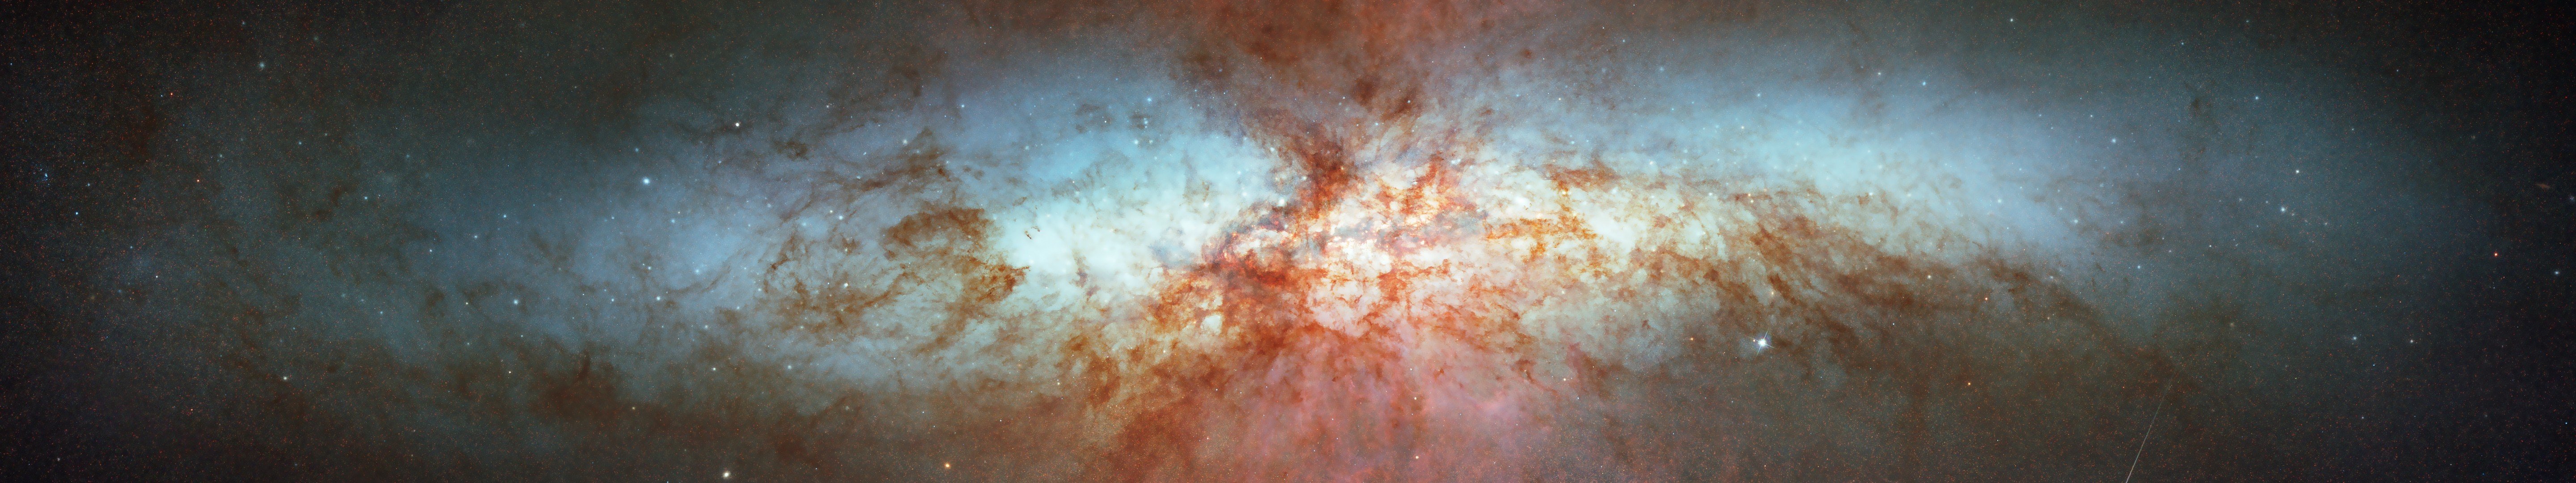 Messier 82, Space, Stars, Suns, Nebula, Hubble Deep Field, ESA, Lights, Galaxy, Triple screen, Multiple display Wallpaper